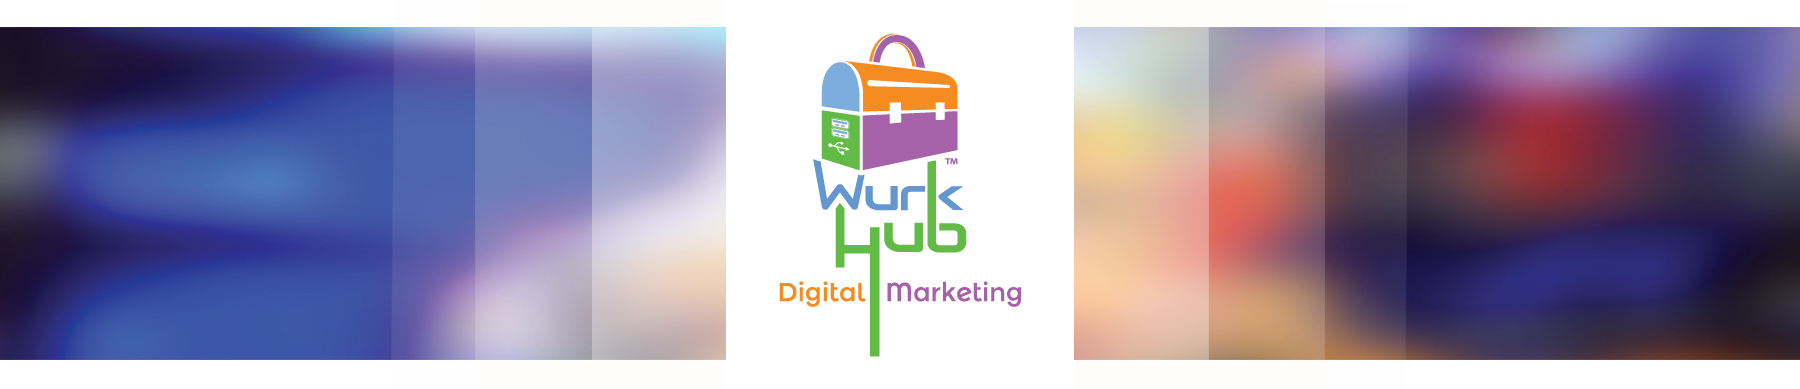 wurkhub digital marketing websites hosting